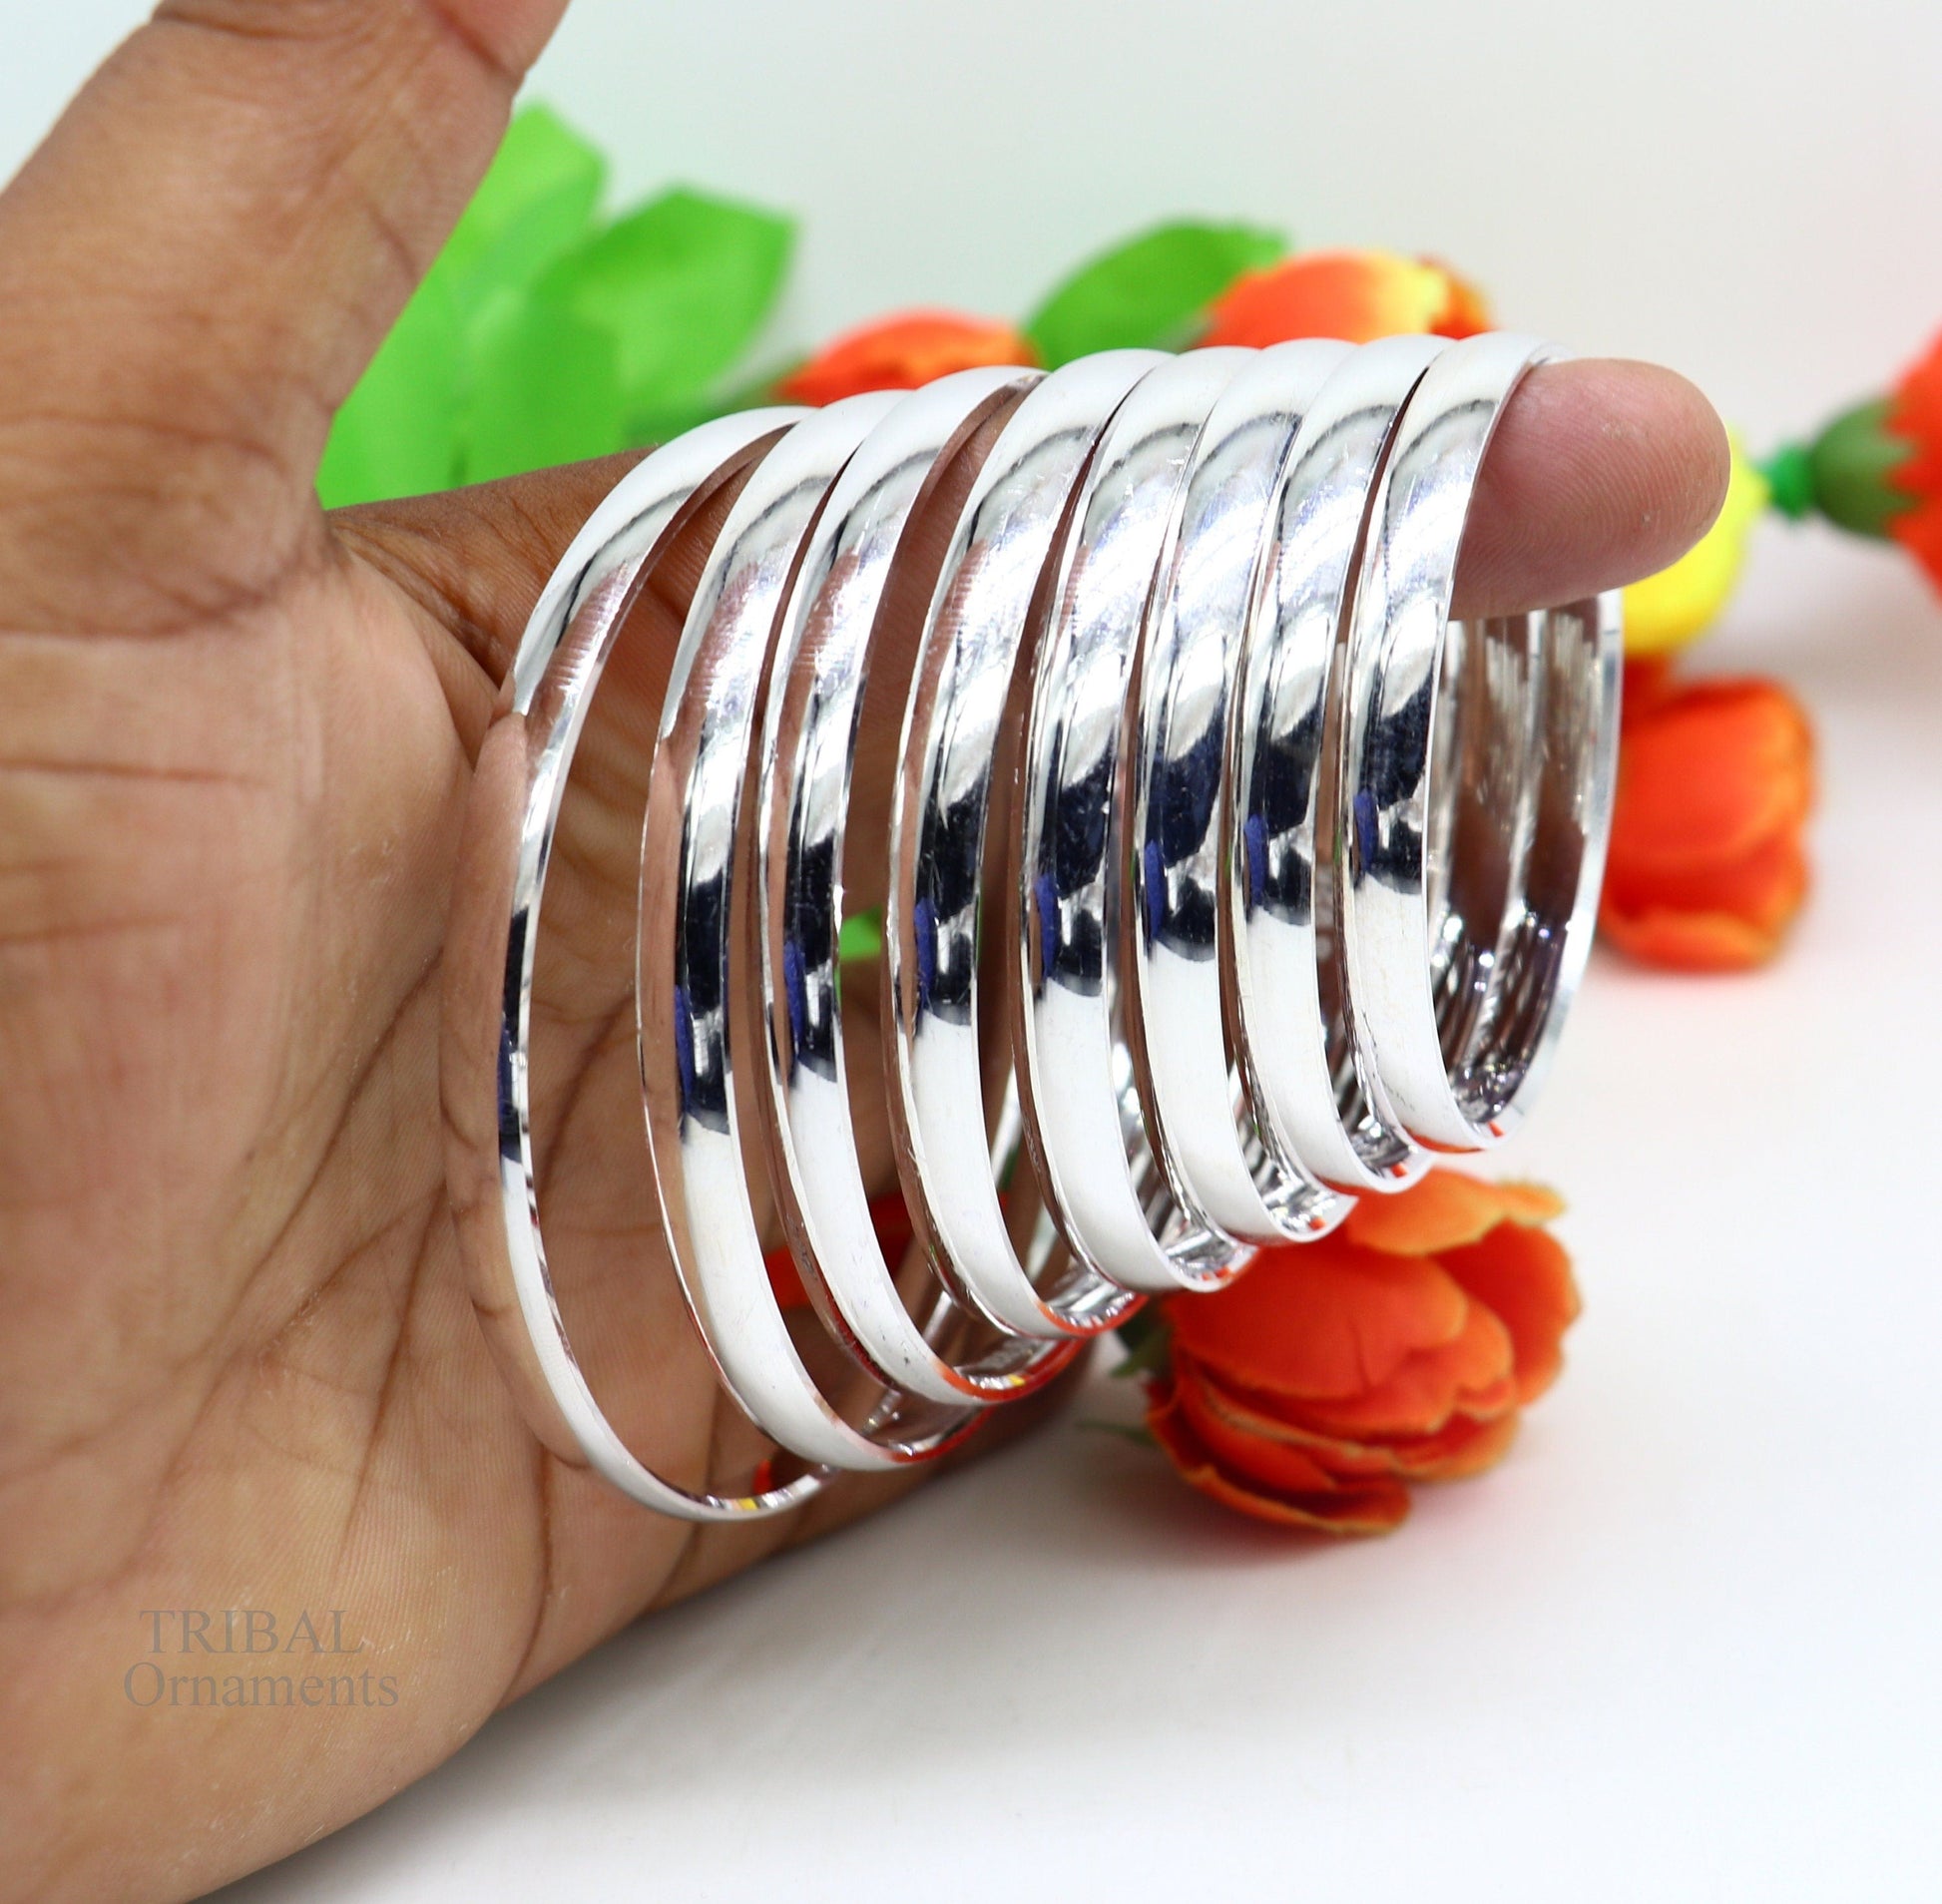 Solid 925 sterling silver handmade punjabi sikha bangle bracelet kada, all sized men's or girl's bangle kada daily use jewelry nsk468 - TRIBAL ORNAMENTS